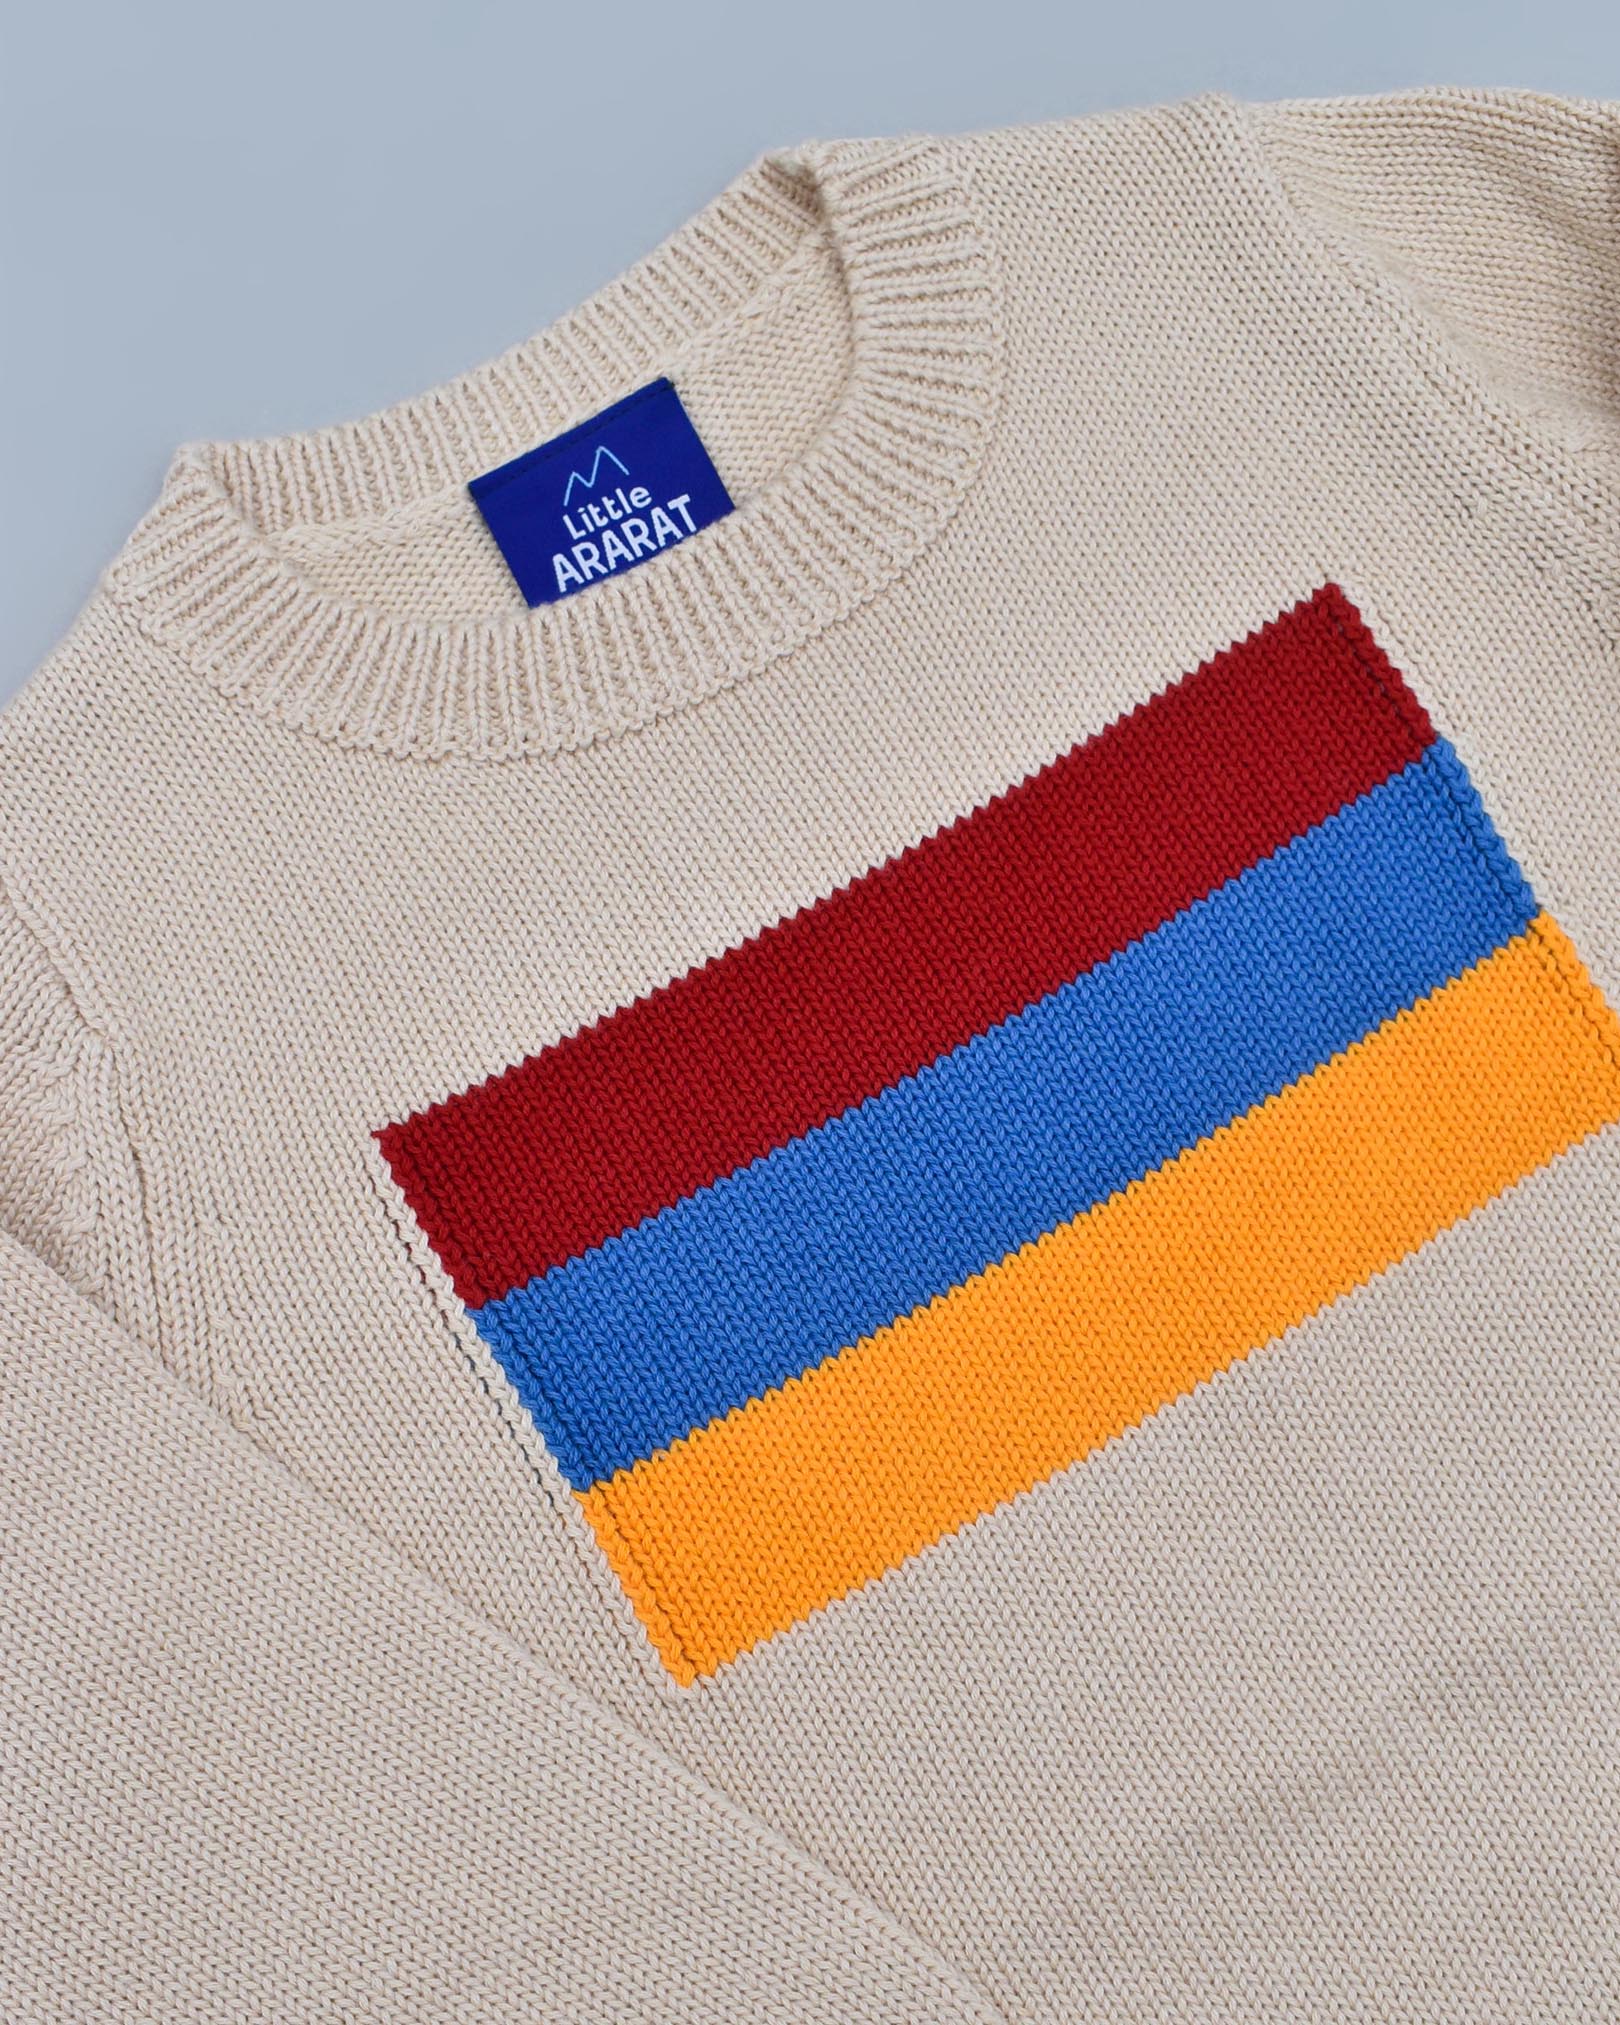 Toddler Knitted Armenia Flag Sweater (Beige)